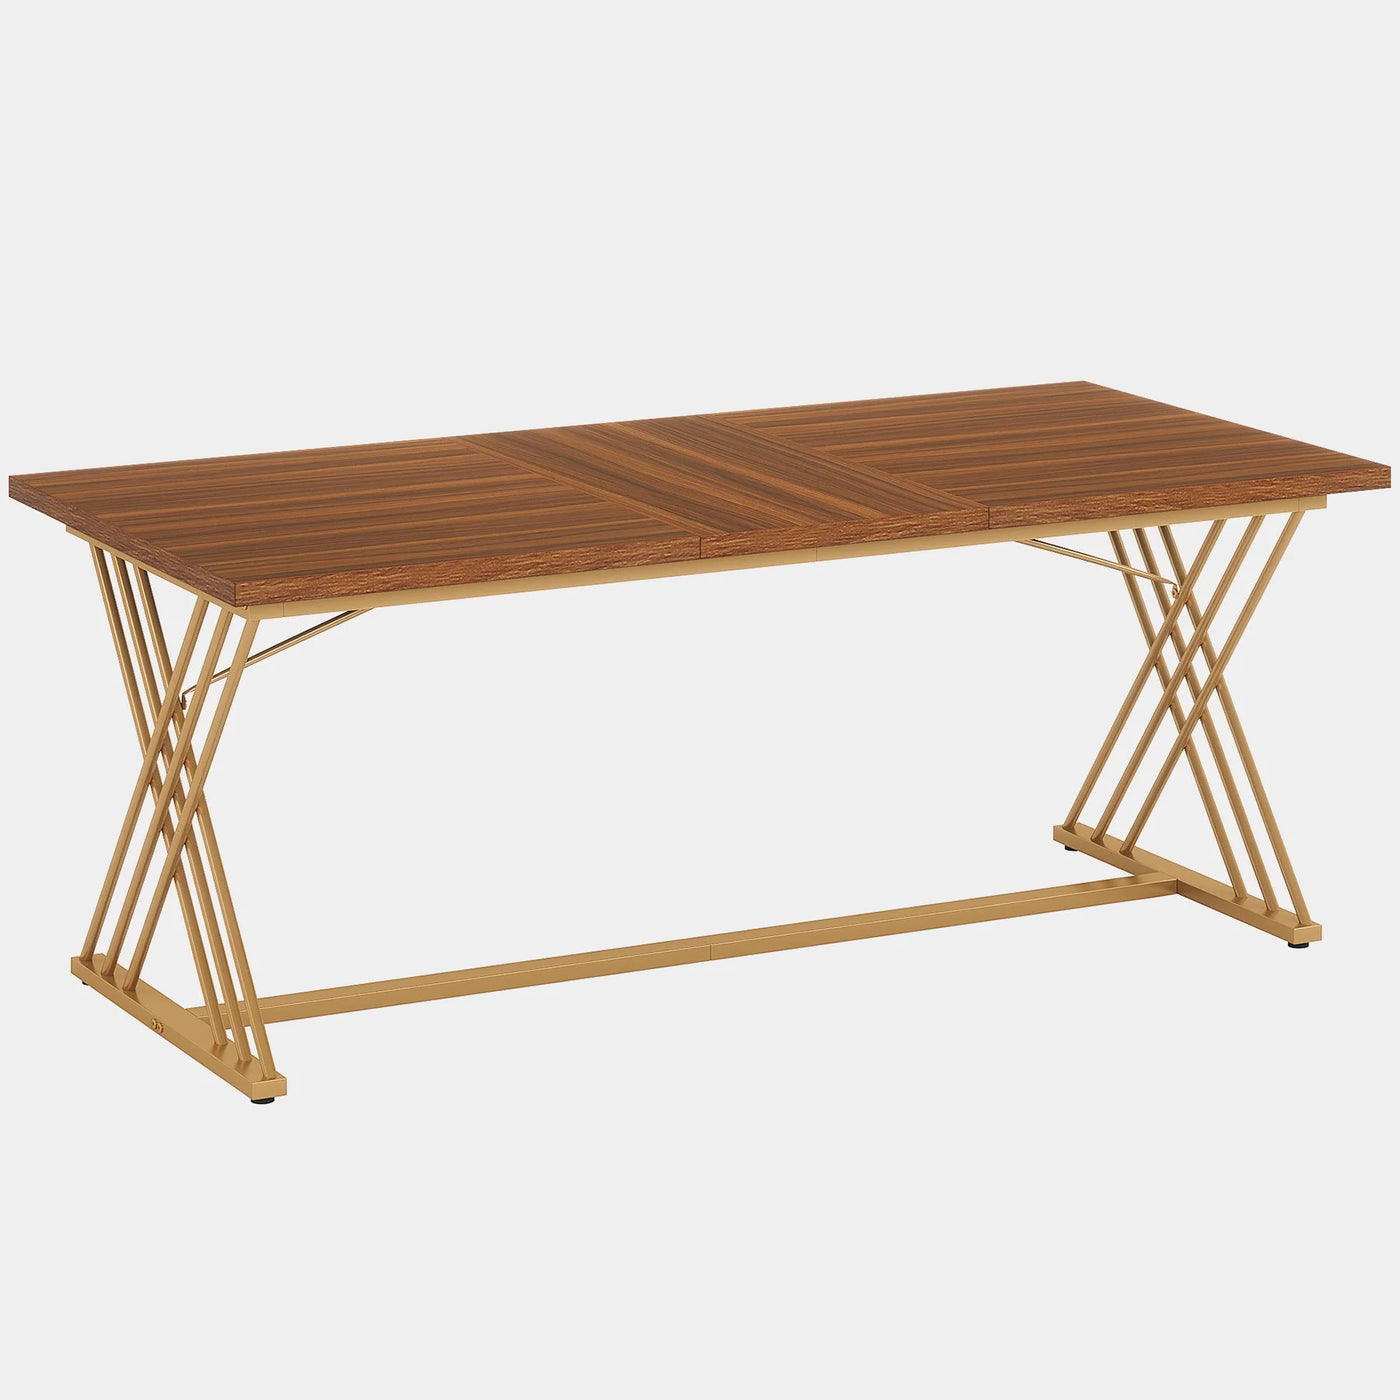 Mesa de comedor Peach de 63 pulgadas, mesa de cocina de madera con marco de metal dorado